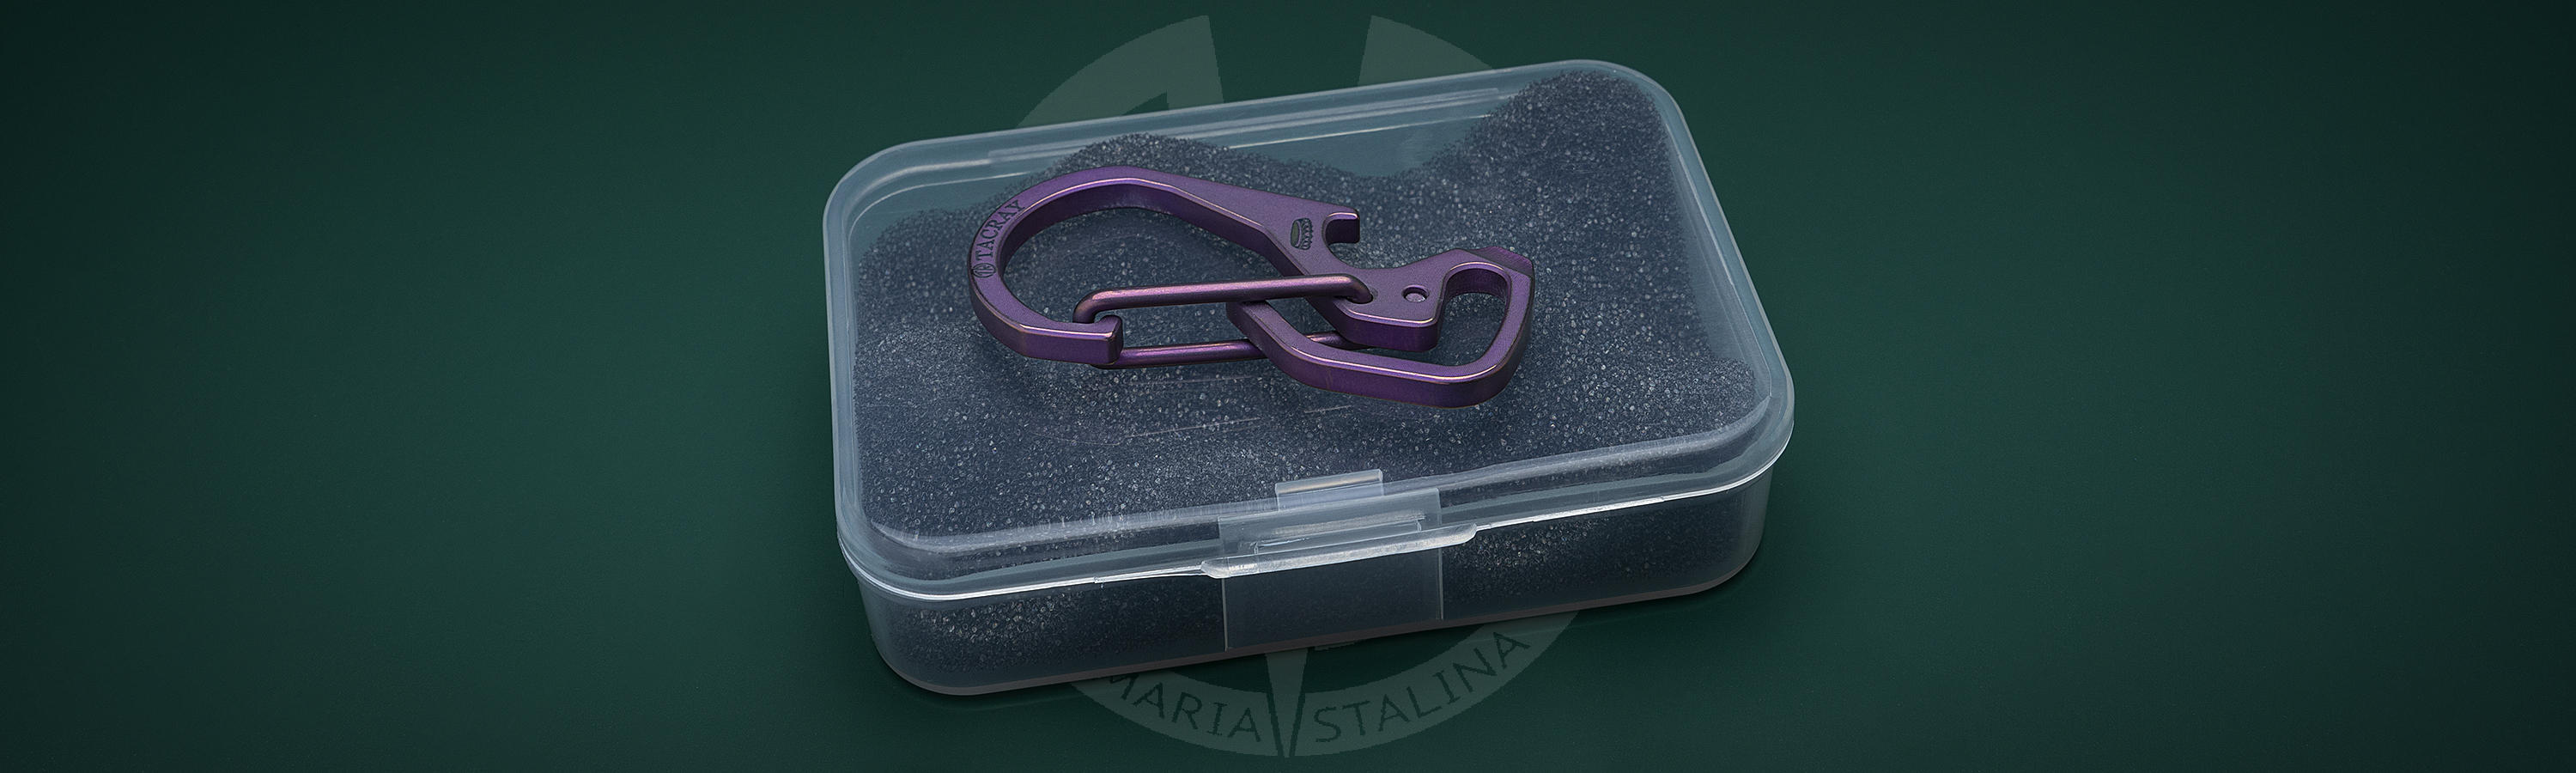 The plastic case comes with a purple carbine